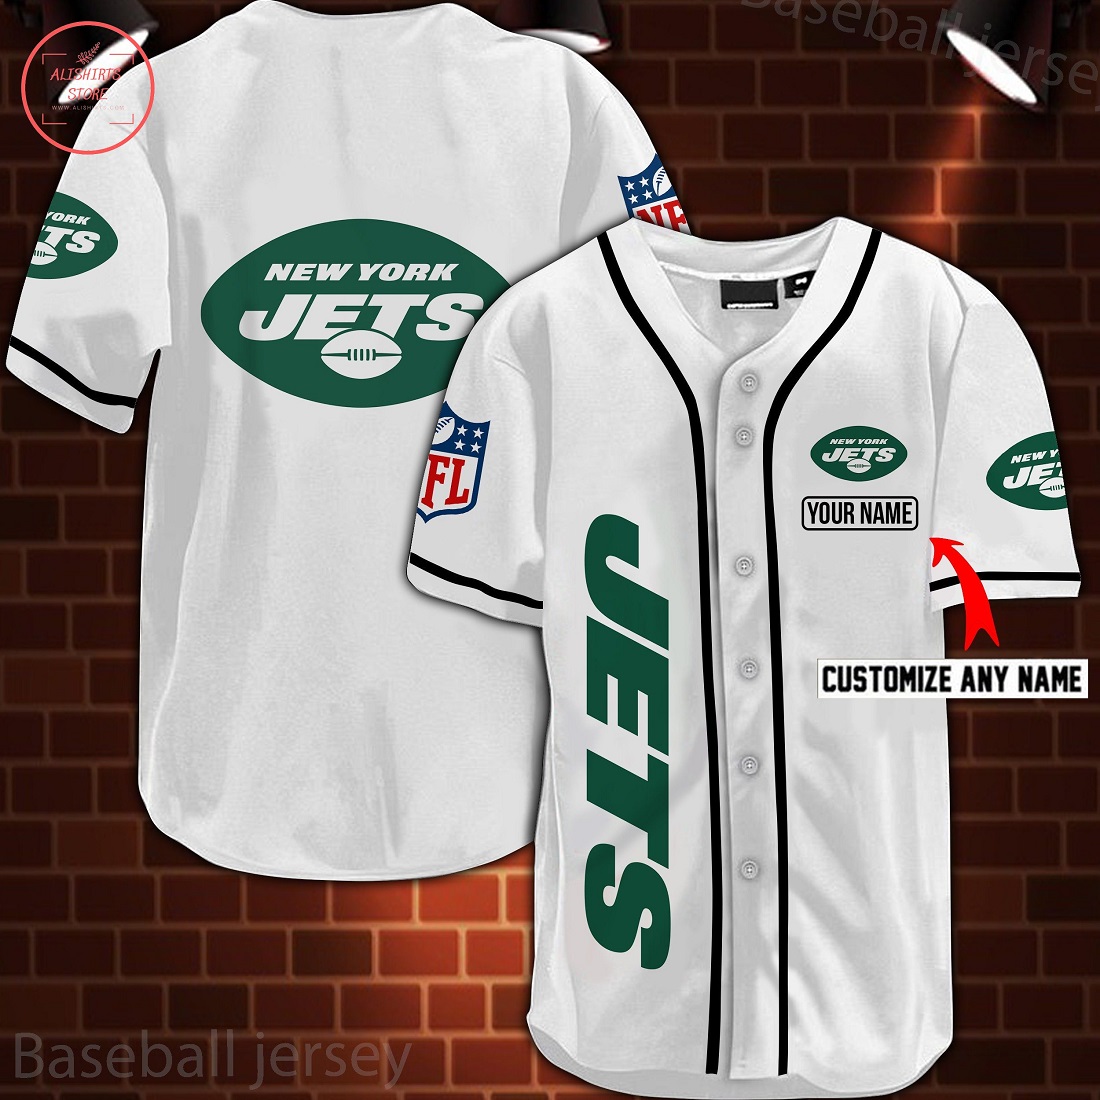 Nfl New York Jets Personalized Baseball Jersey